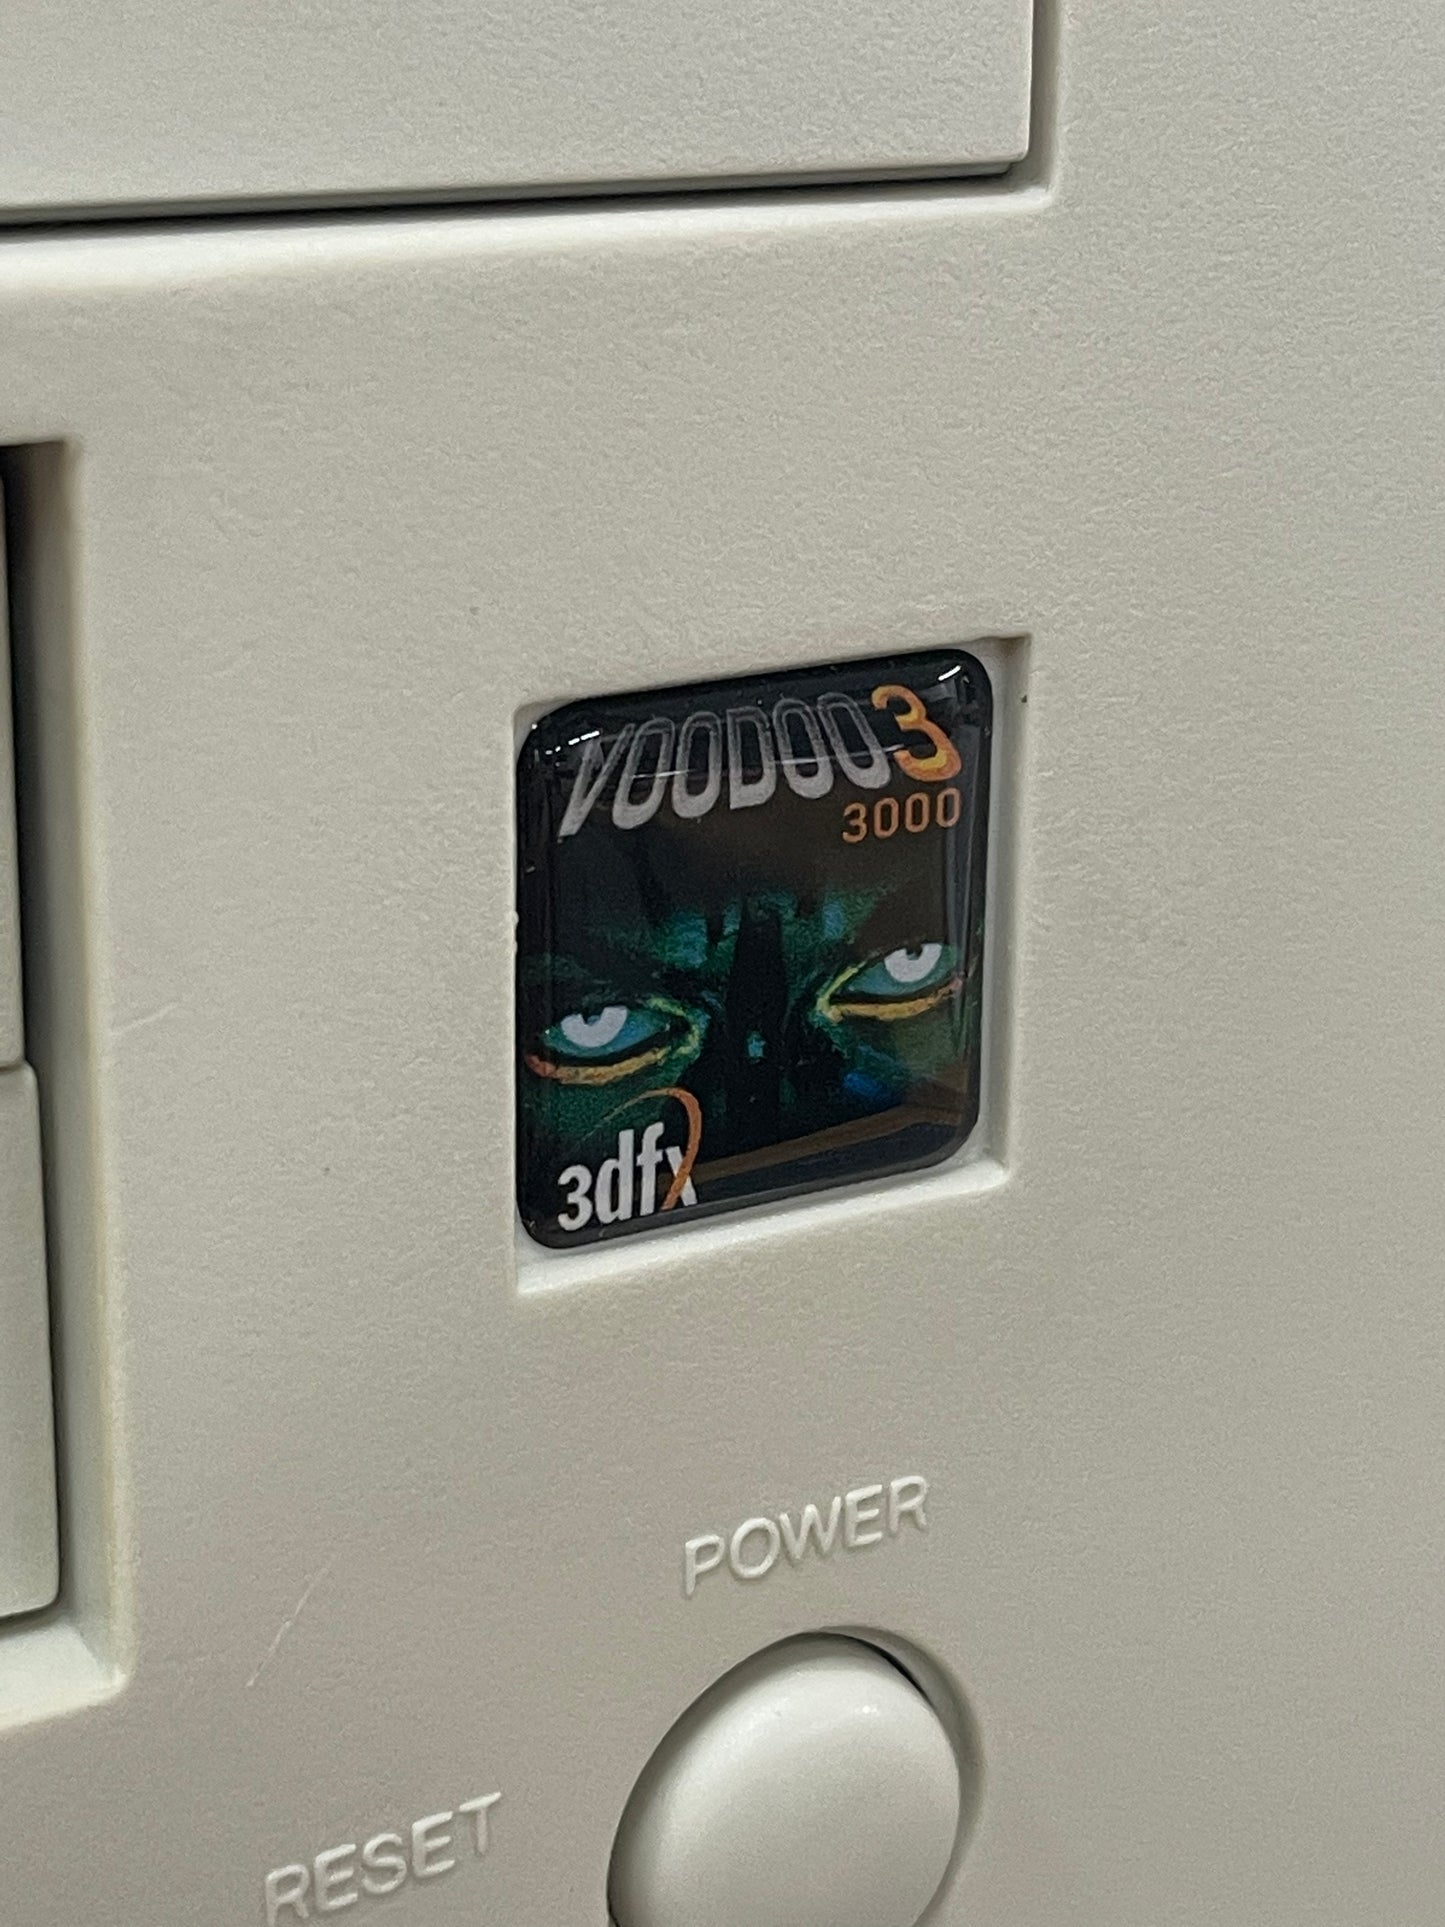 3Dfx "Faces Series" Voodoo3 3000 Case Badge Sticker - DOME